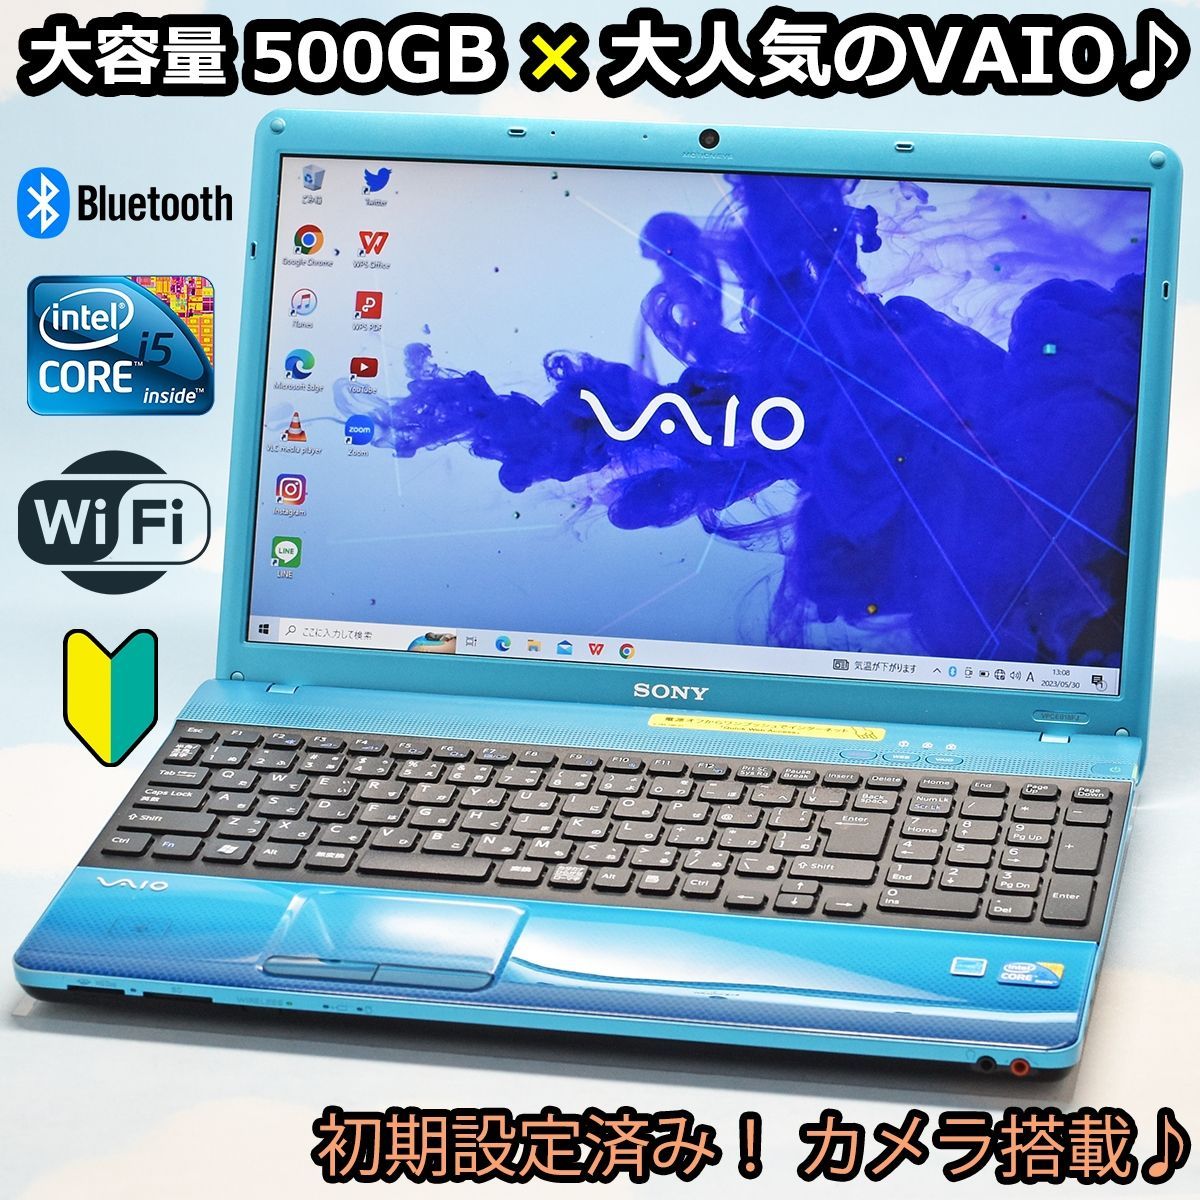 SONY VAIO 人気の青VAIO！ 大容量 500GB HDD、Bluetooth、Corei5